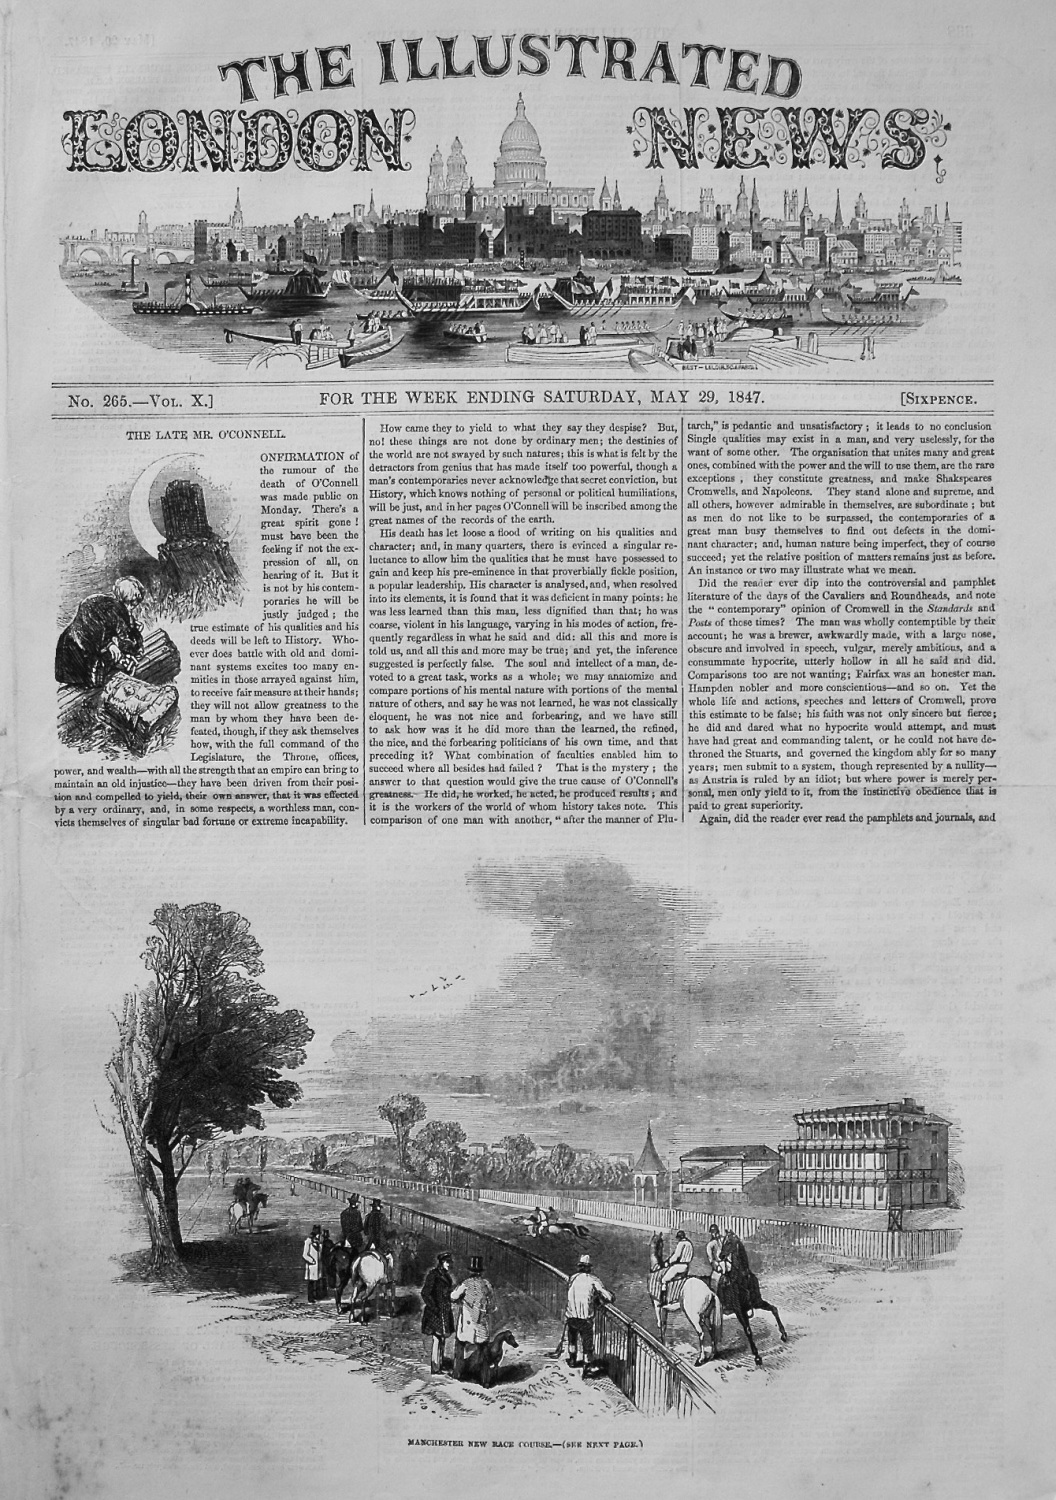 Illustrated London News. May 29th, 1847.